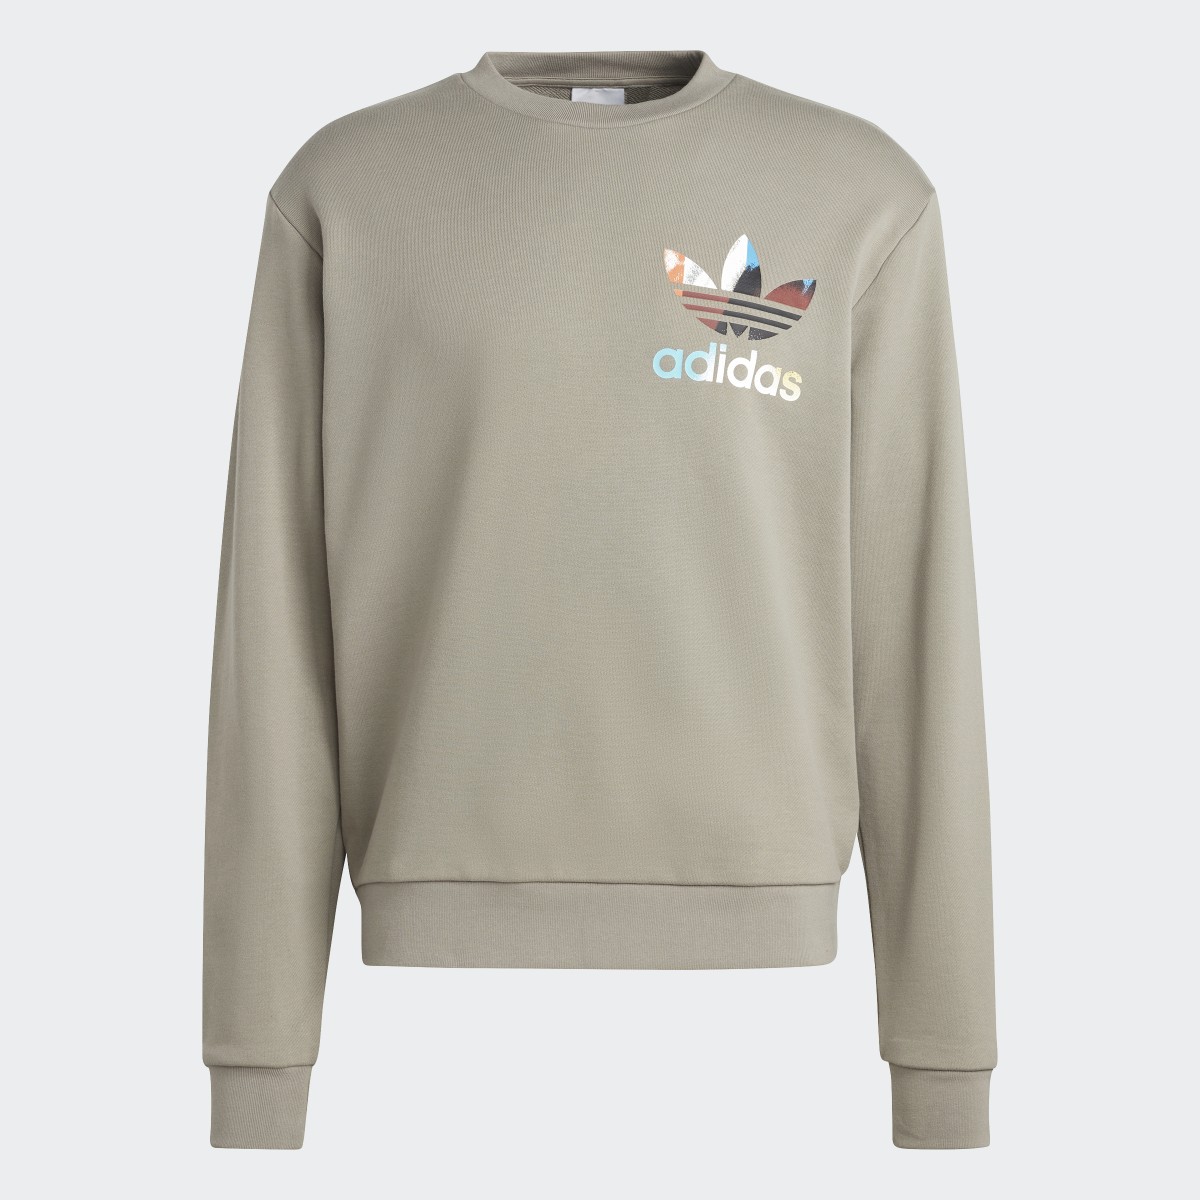 Adidas Sweatshirt Off the Grid. 5